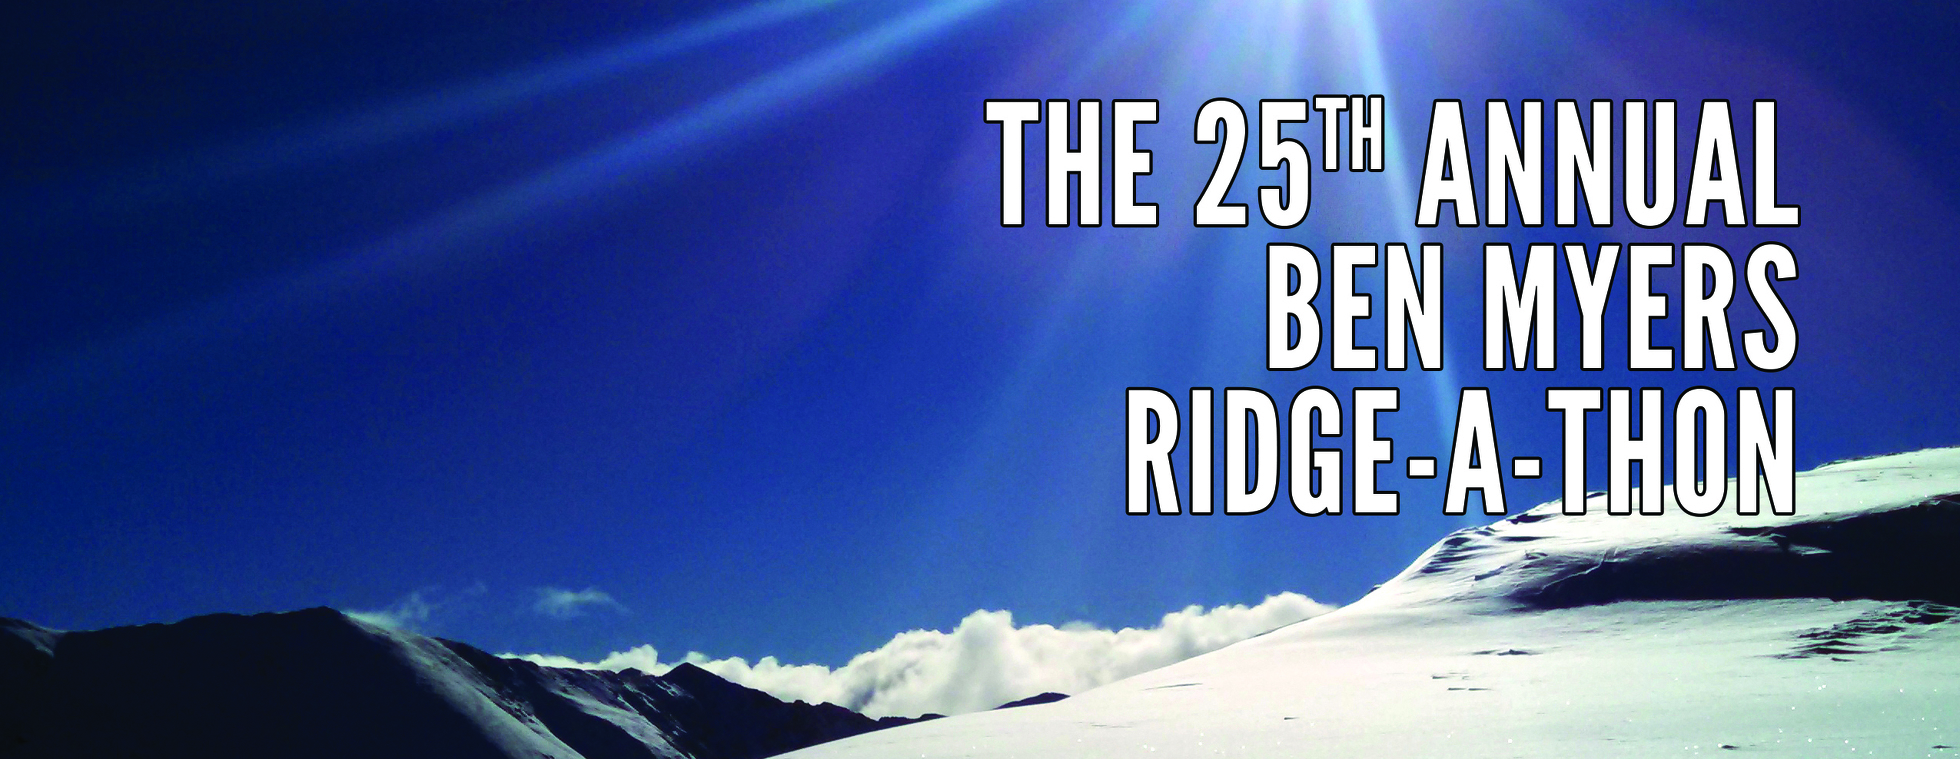 Ben Myers Ridge-A-Thon at Taos Ski Valley 2021